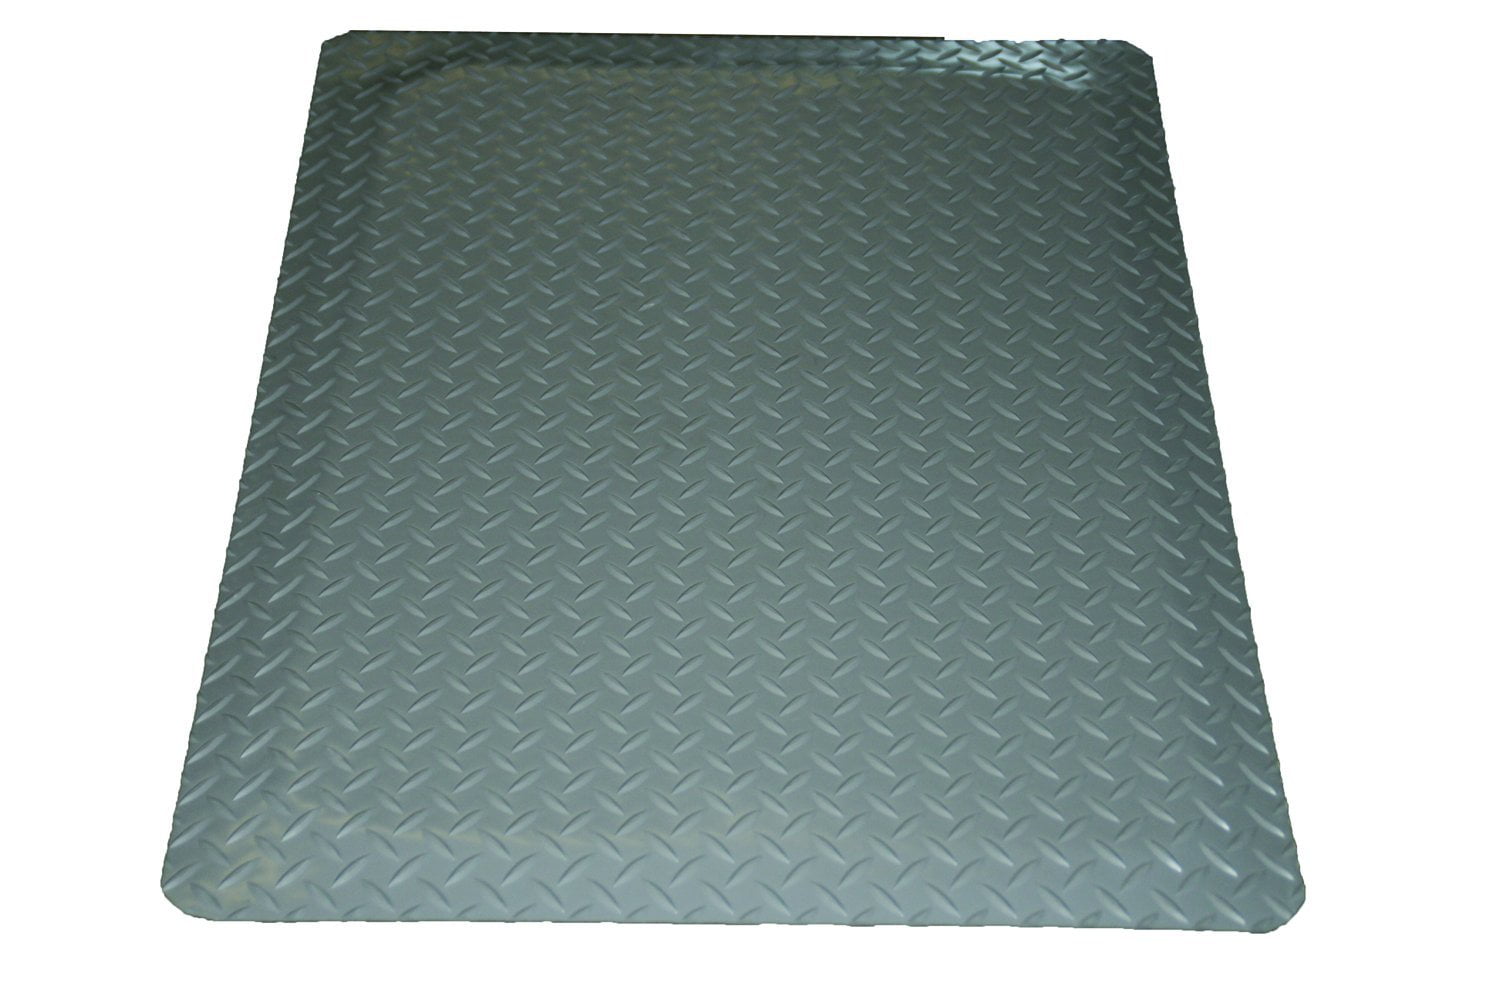 Rhino Diamond-Plate Heavy-Duty Anti-Fatigue Mat